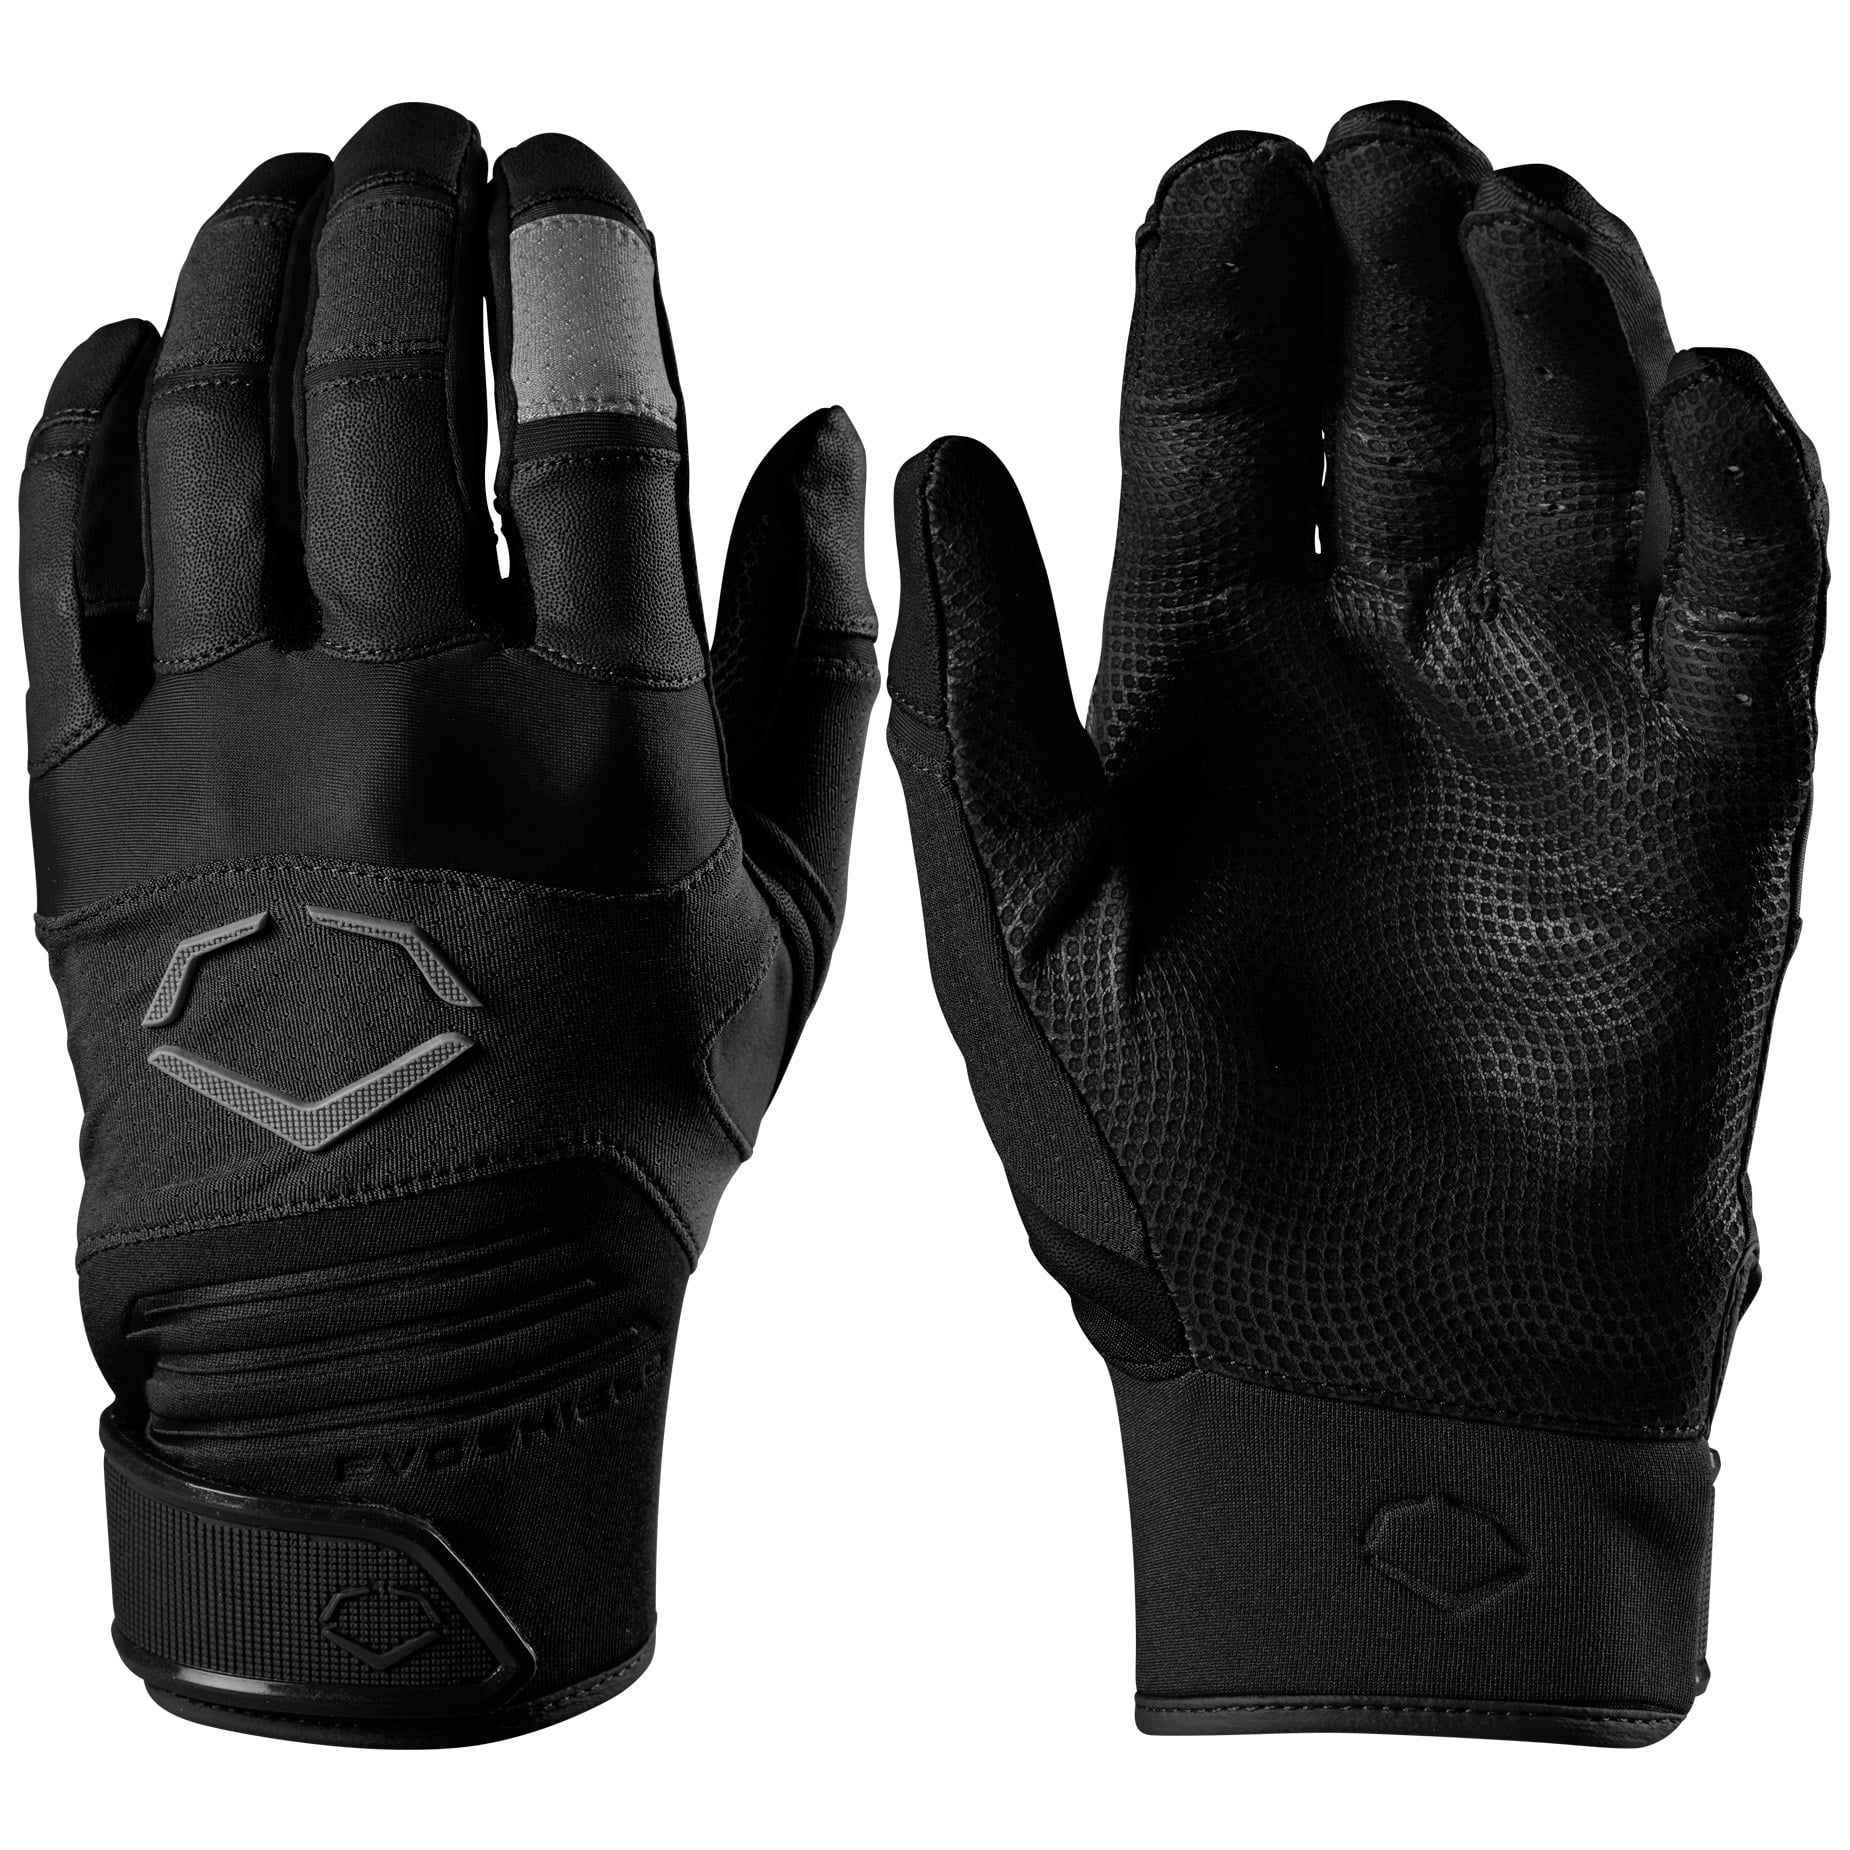 Evoshield Adult Evo Aggressor Batting Gloves Navy size Large 